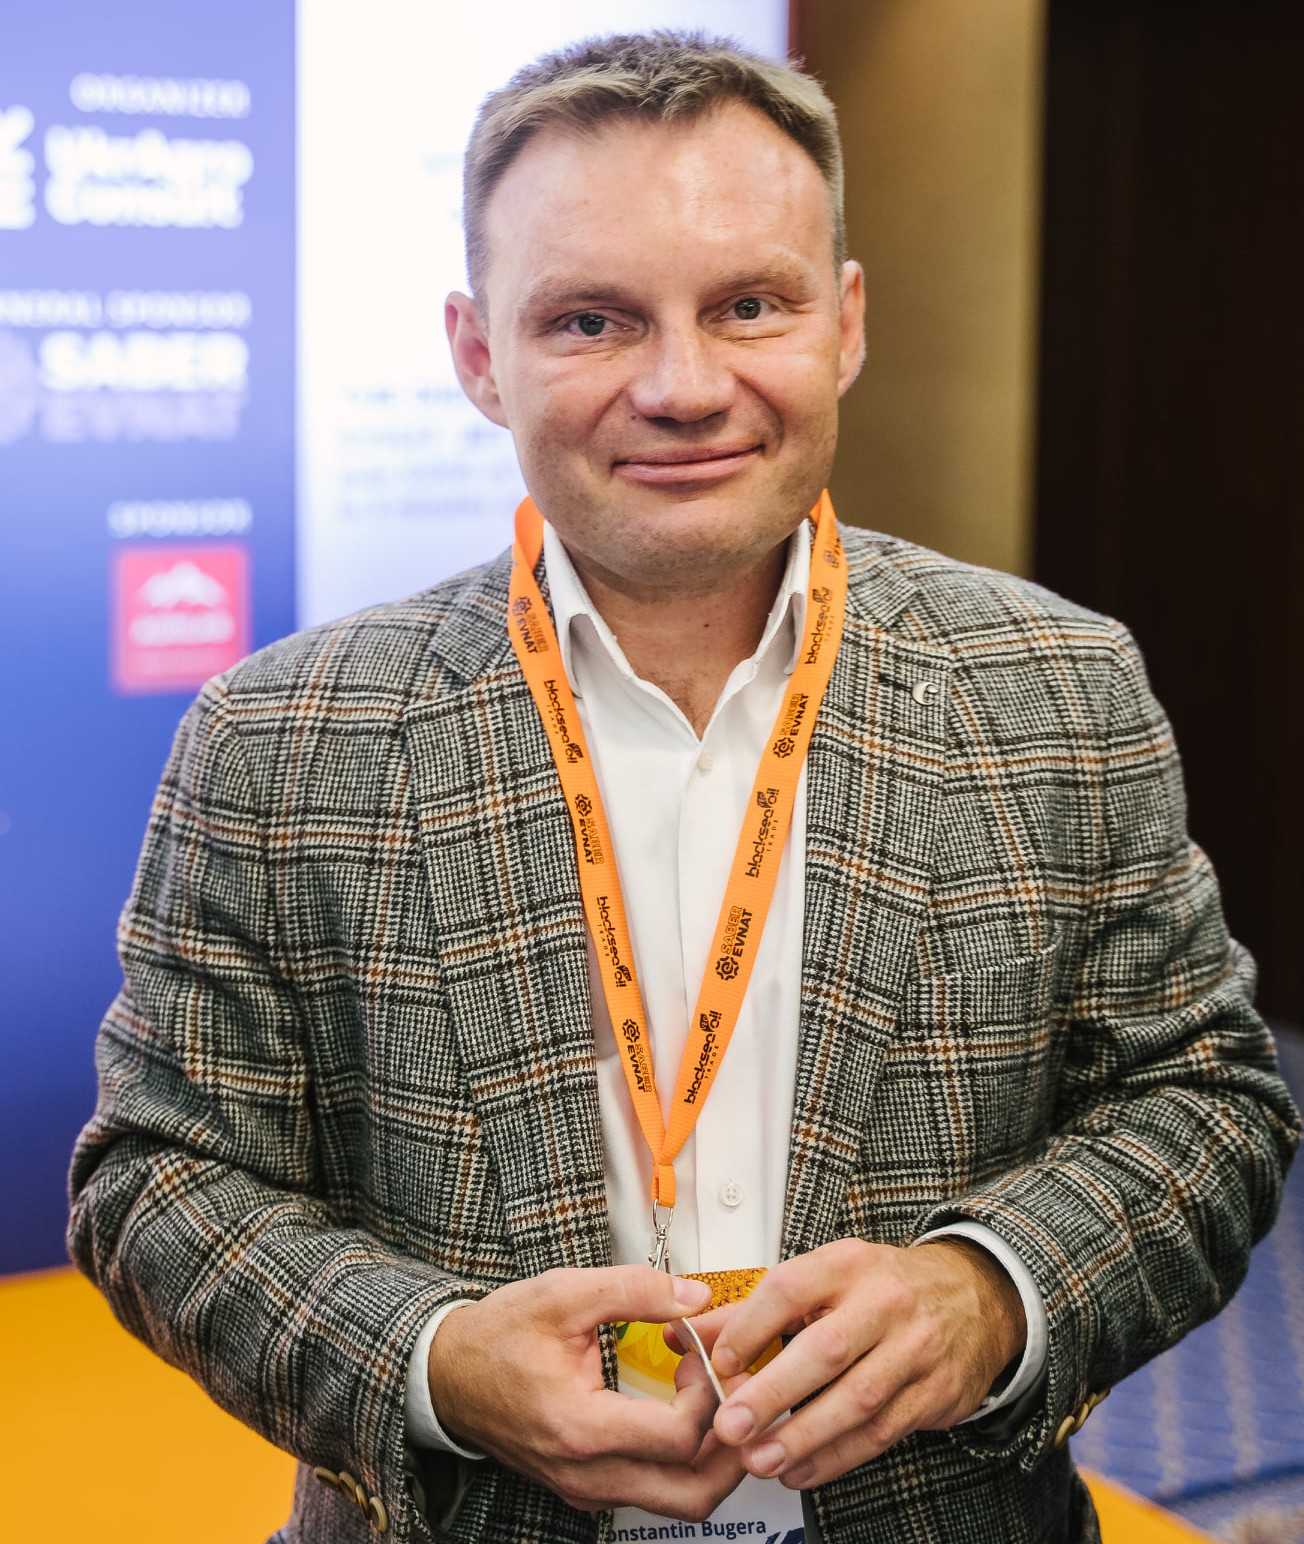 Konstantin Bugera, Commercial Director of Poseidon Tradewaves